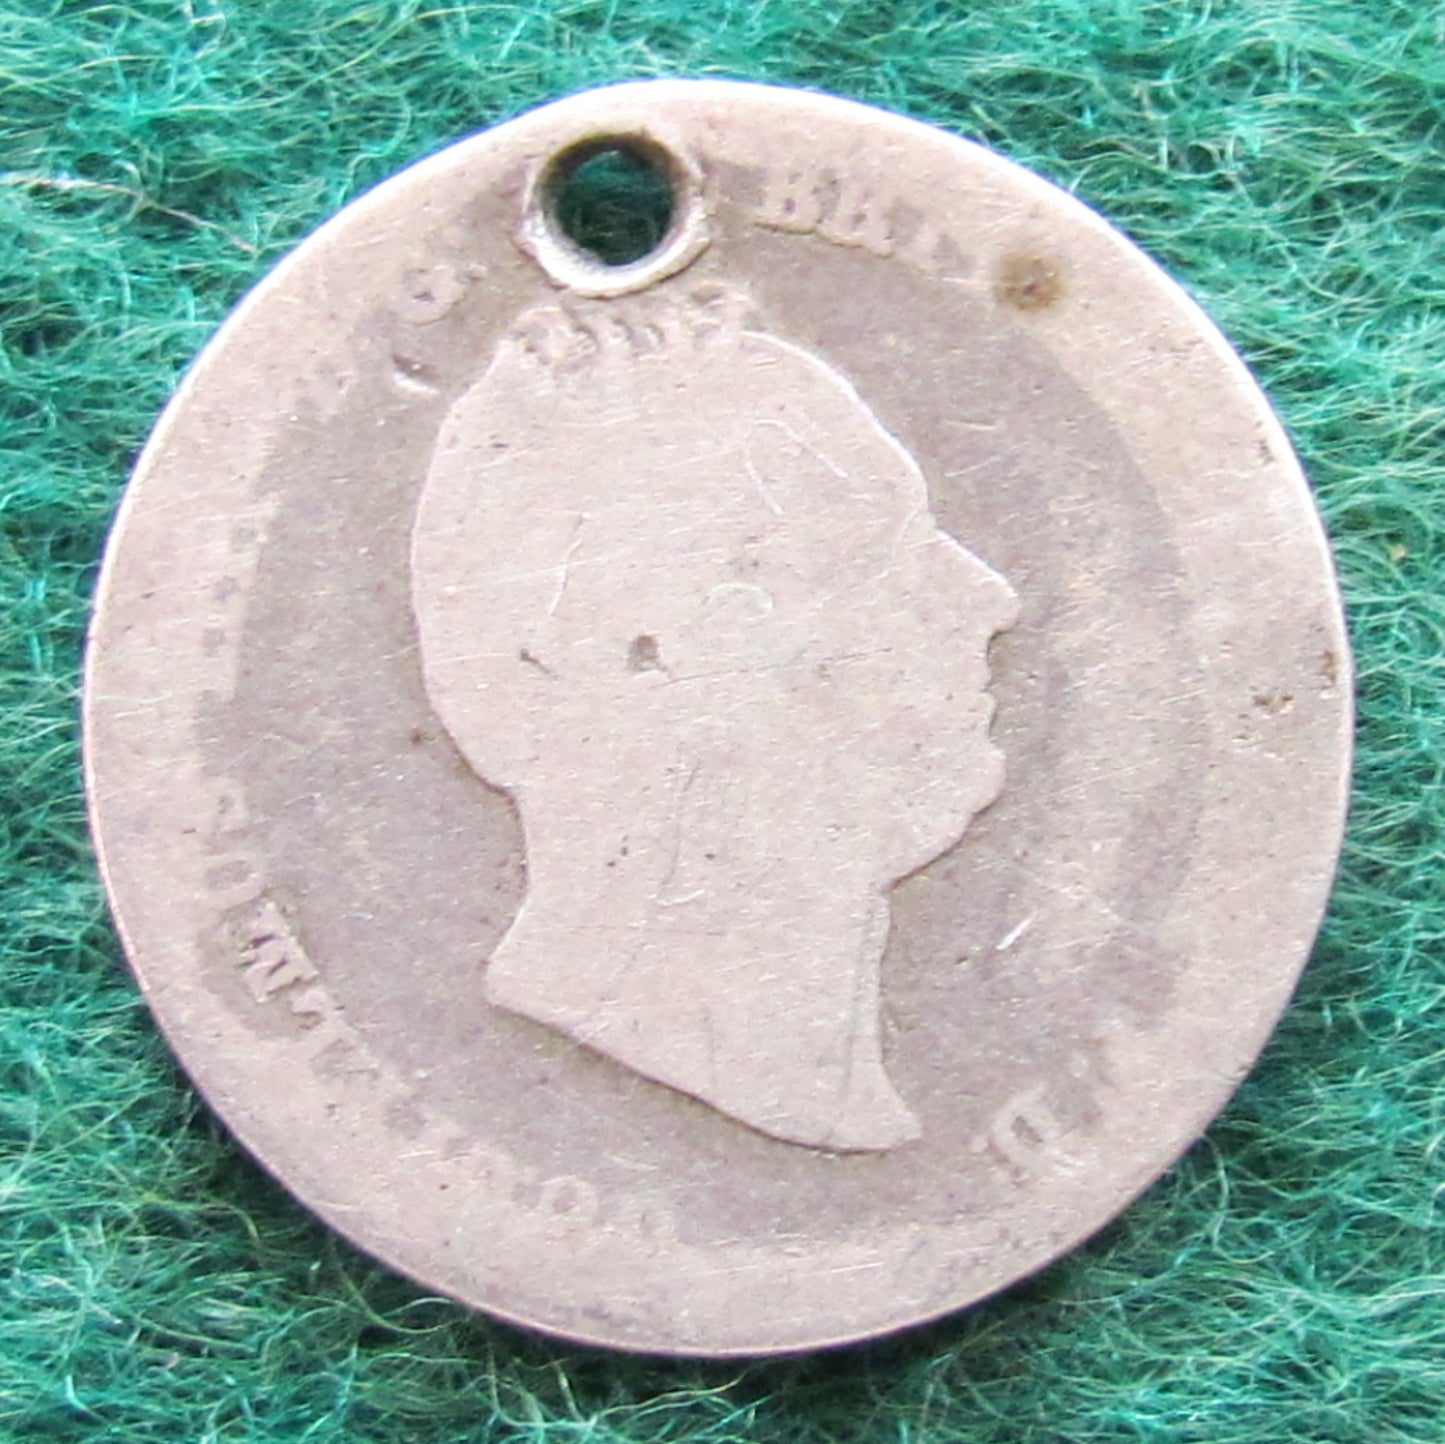 GB British UK English 1836 Four Pence Groat King William IV Coin